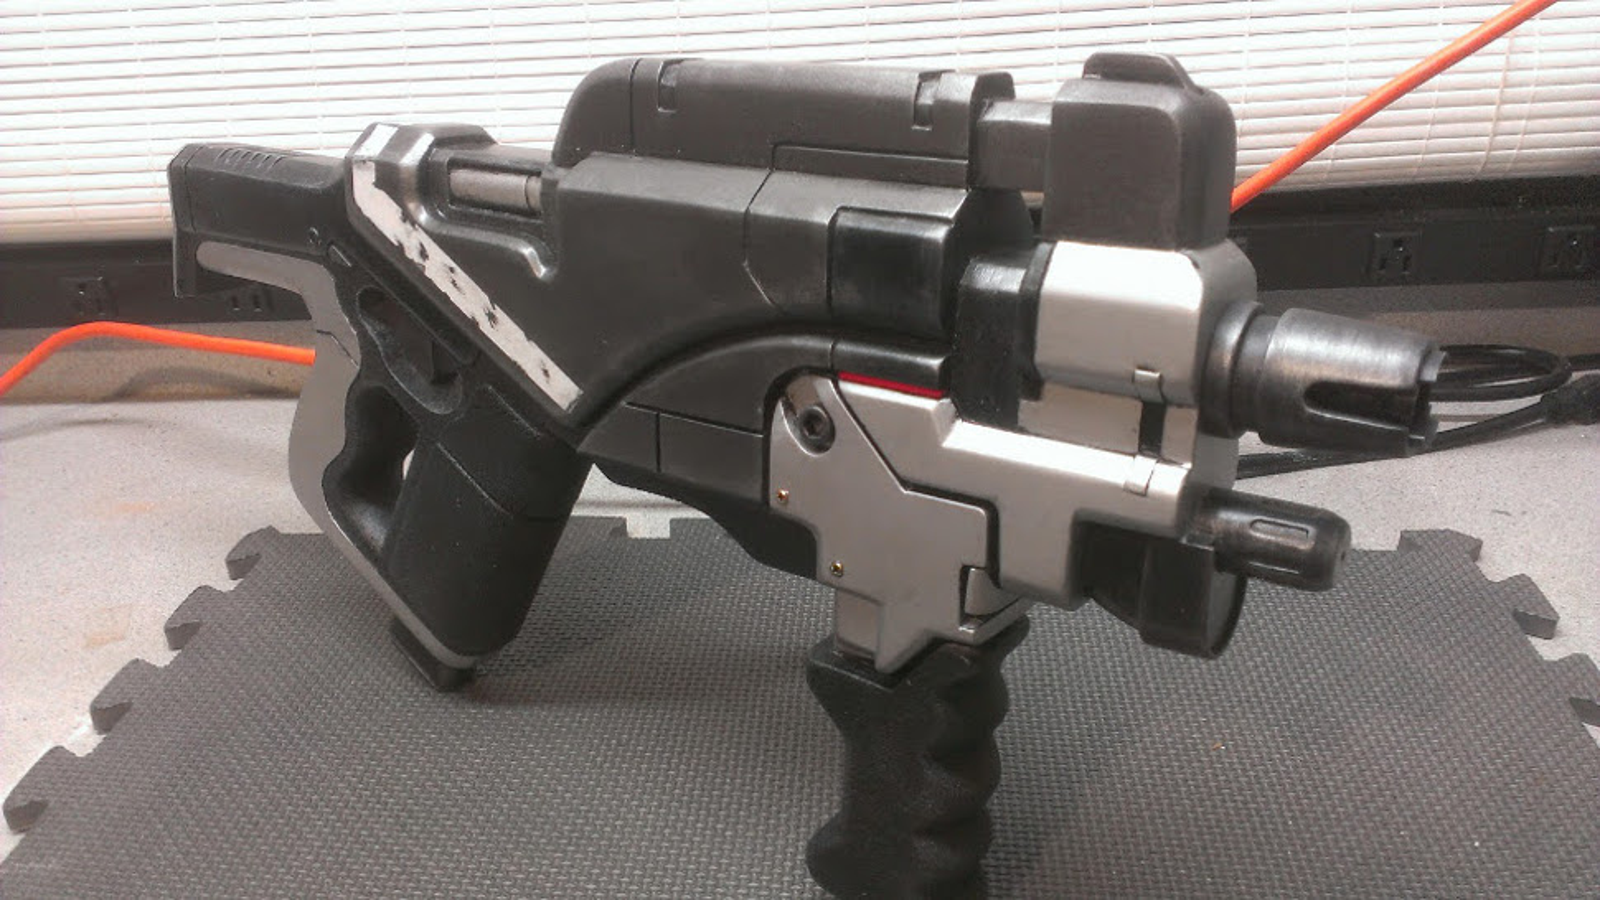 mass effect 2 submachine gun